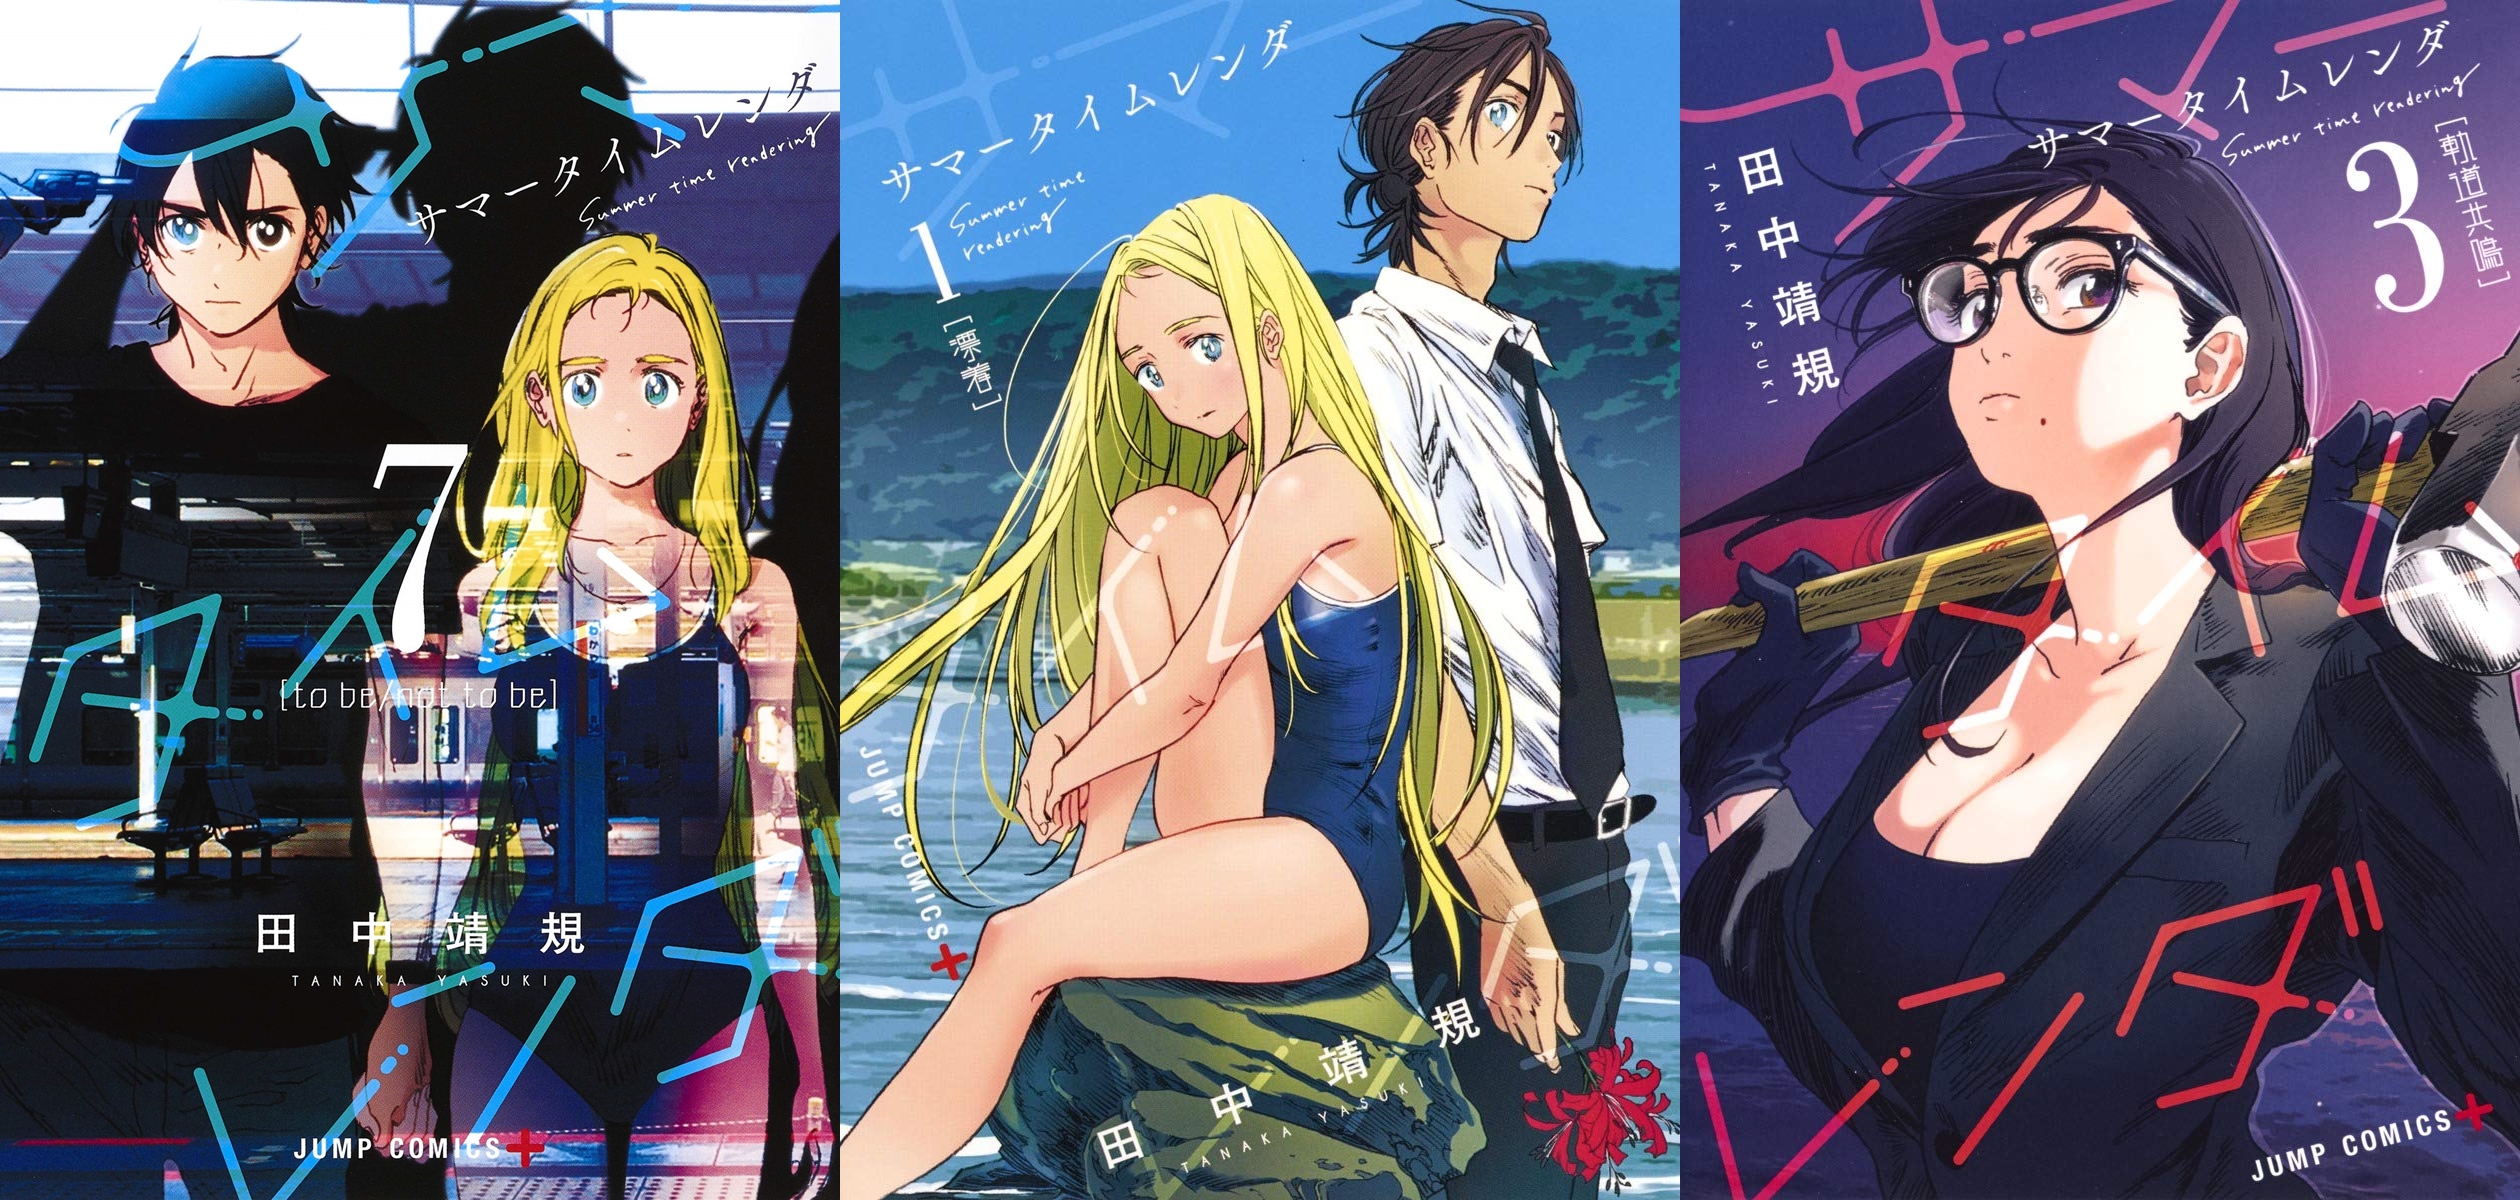 Summer Time Rendering – Novo vídeo promocional do anime - Manga Livre RS